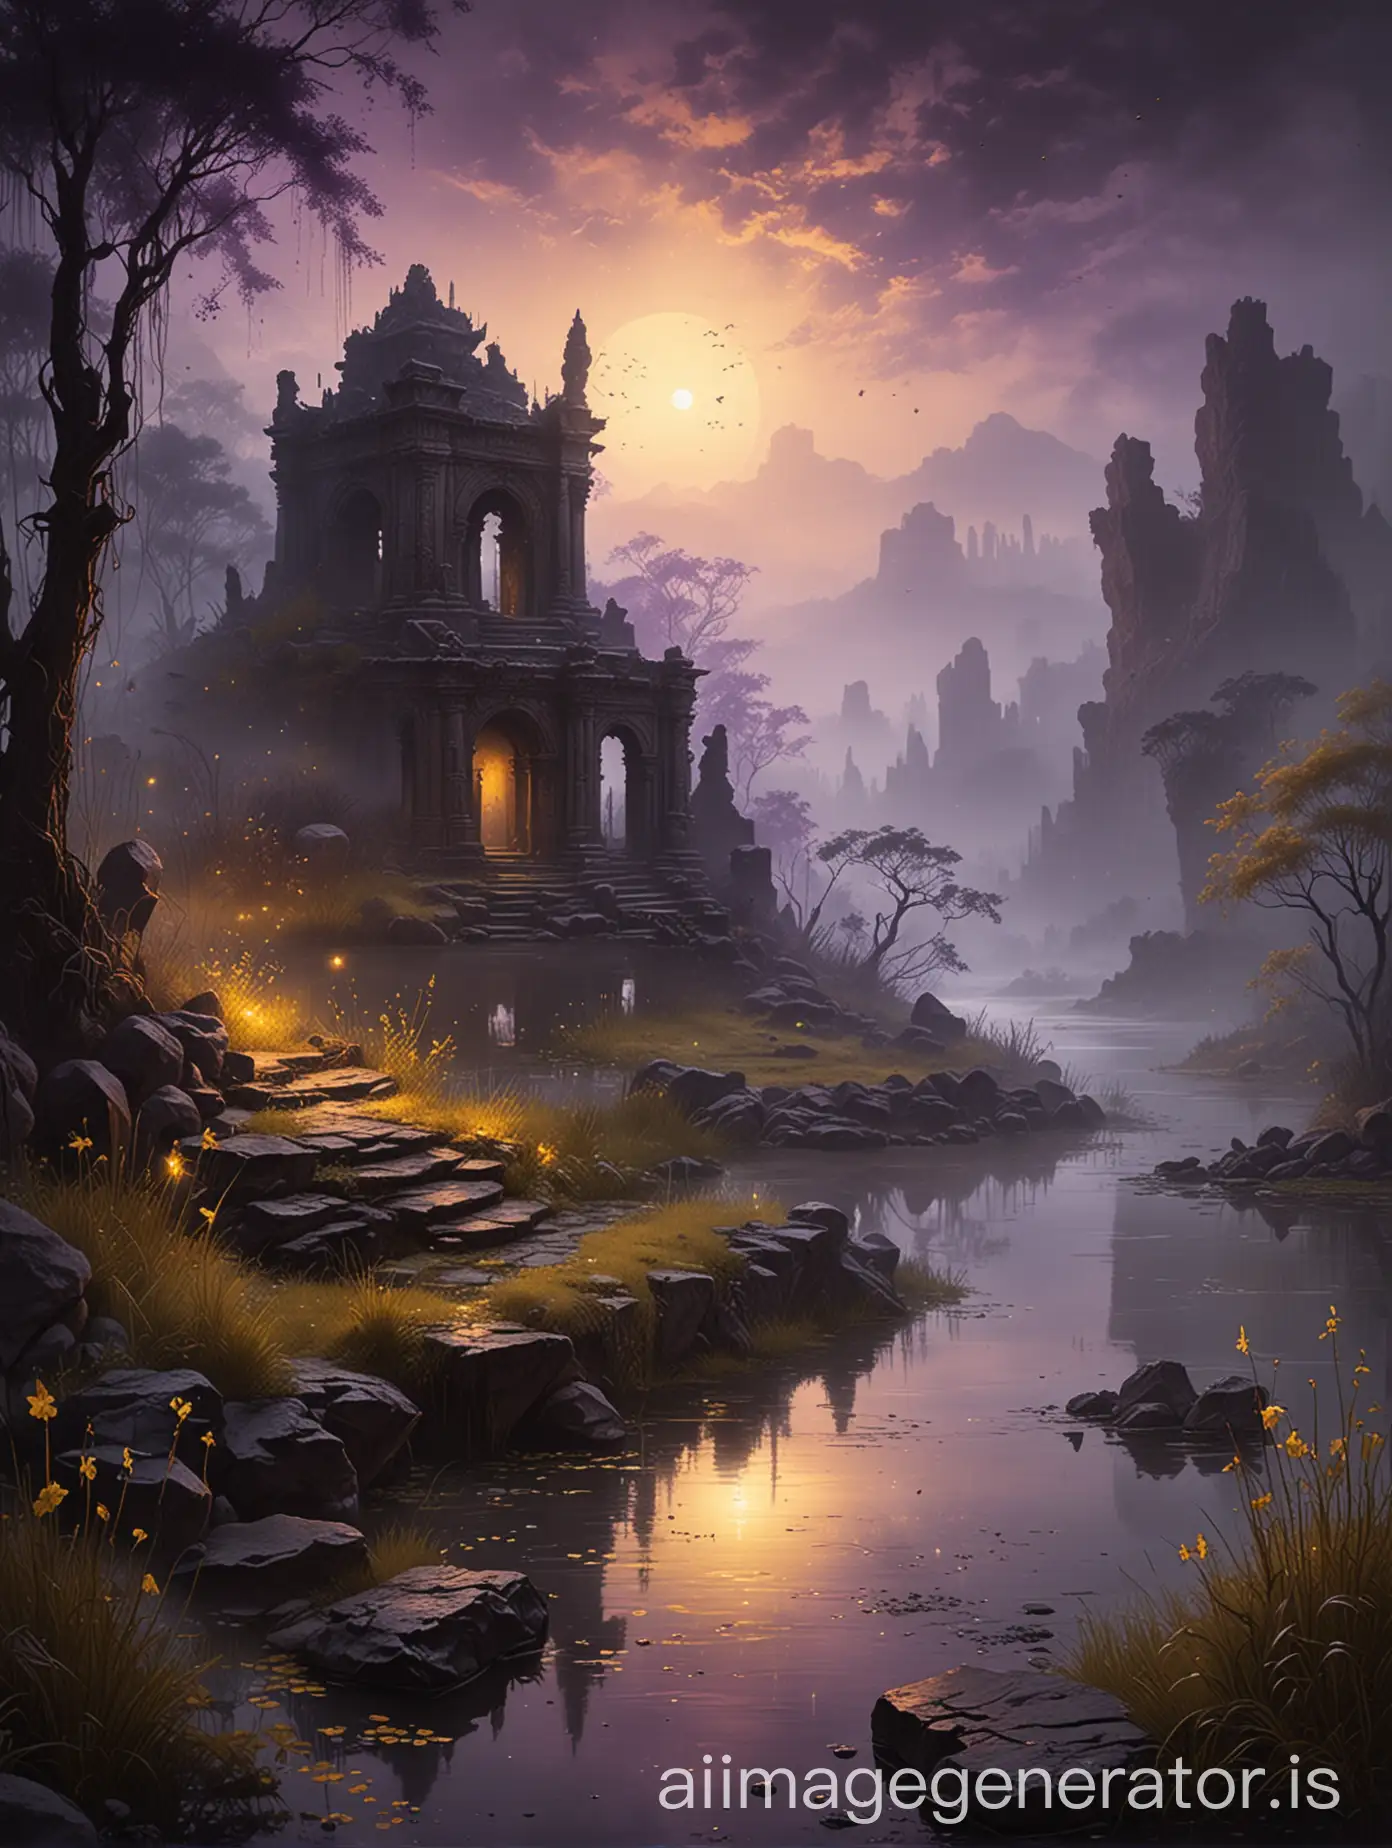 Dark-Fantasy-Art-Ancient-Ruins-in-Rainy-Garden-at-Sunset-with-Fireflies